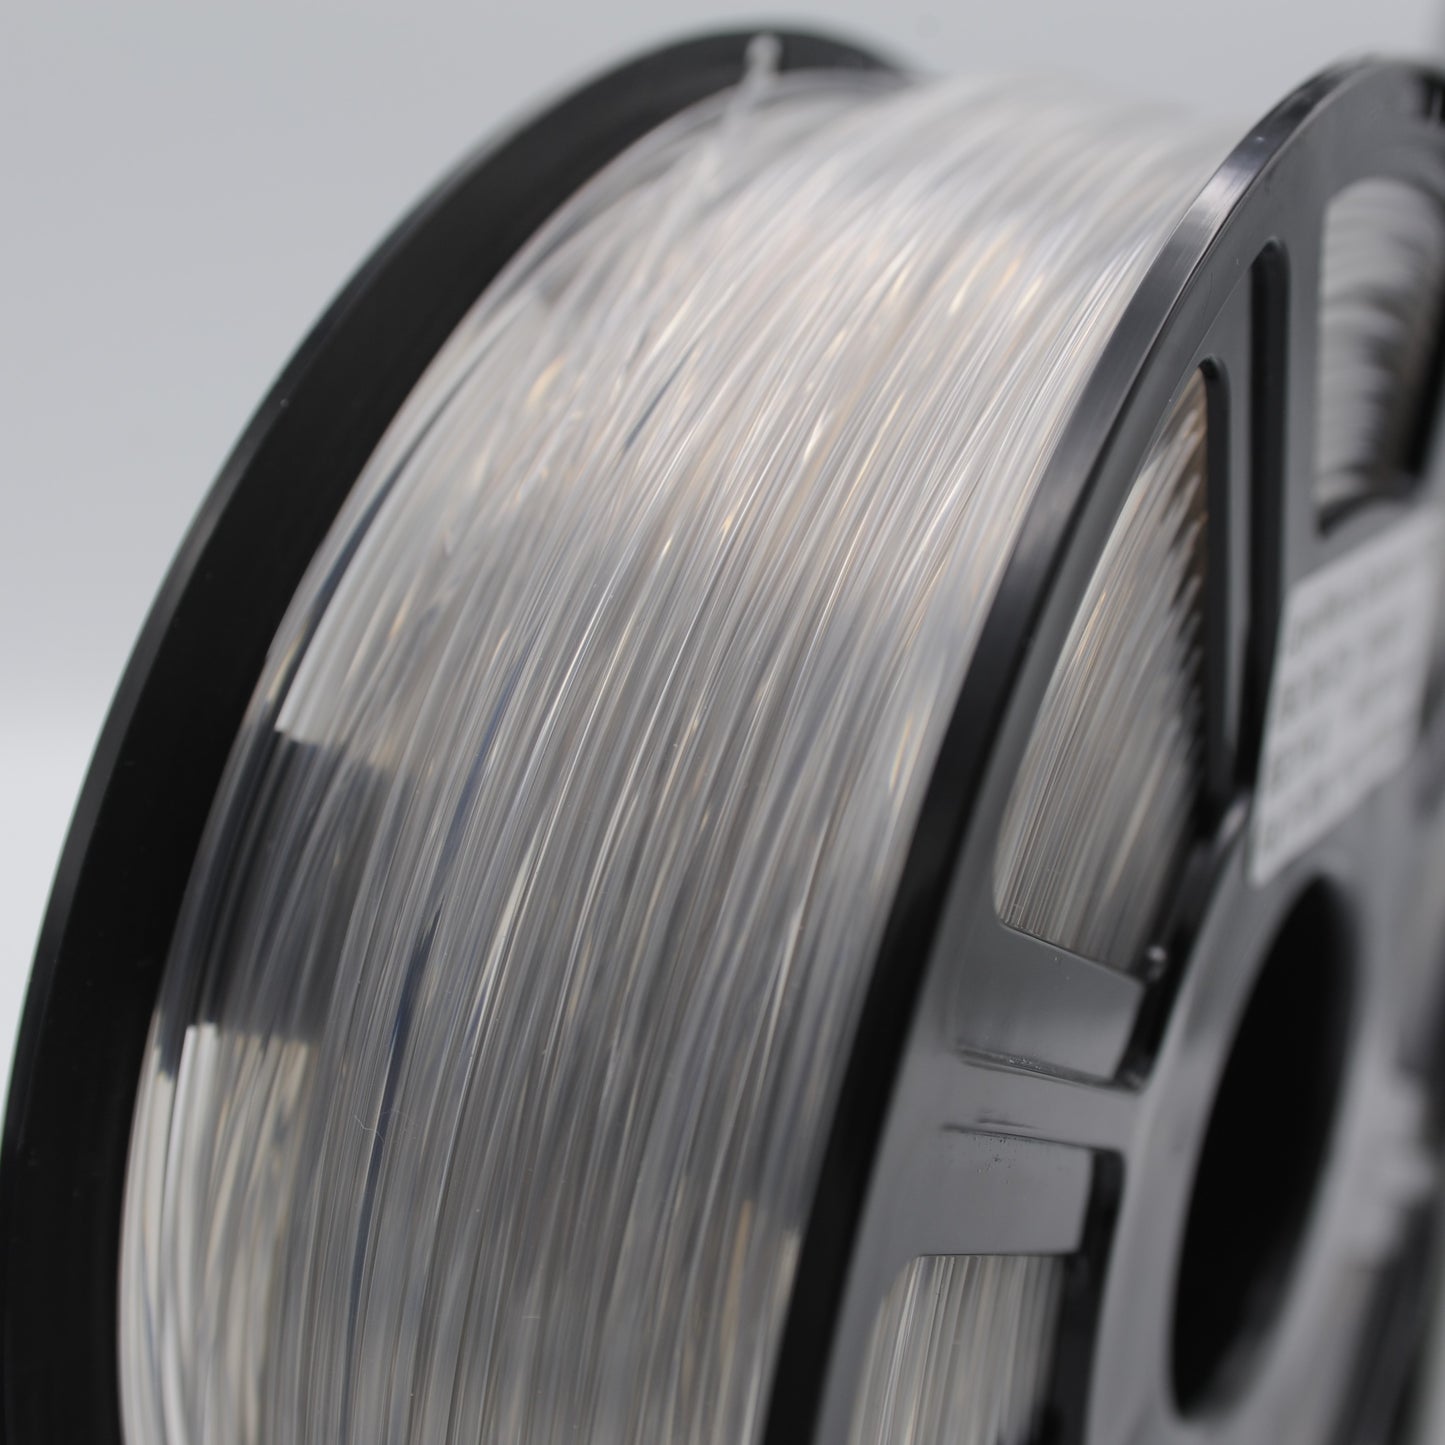 LayerWorks PETG Filament 1.75mm